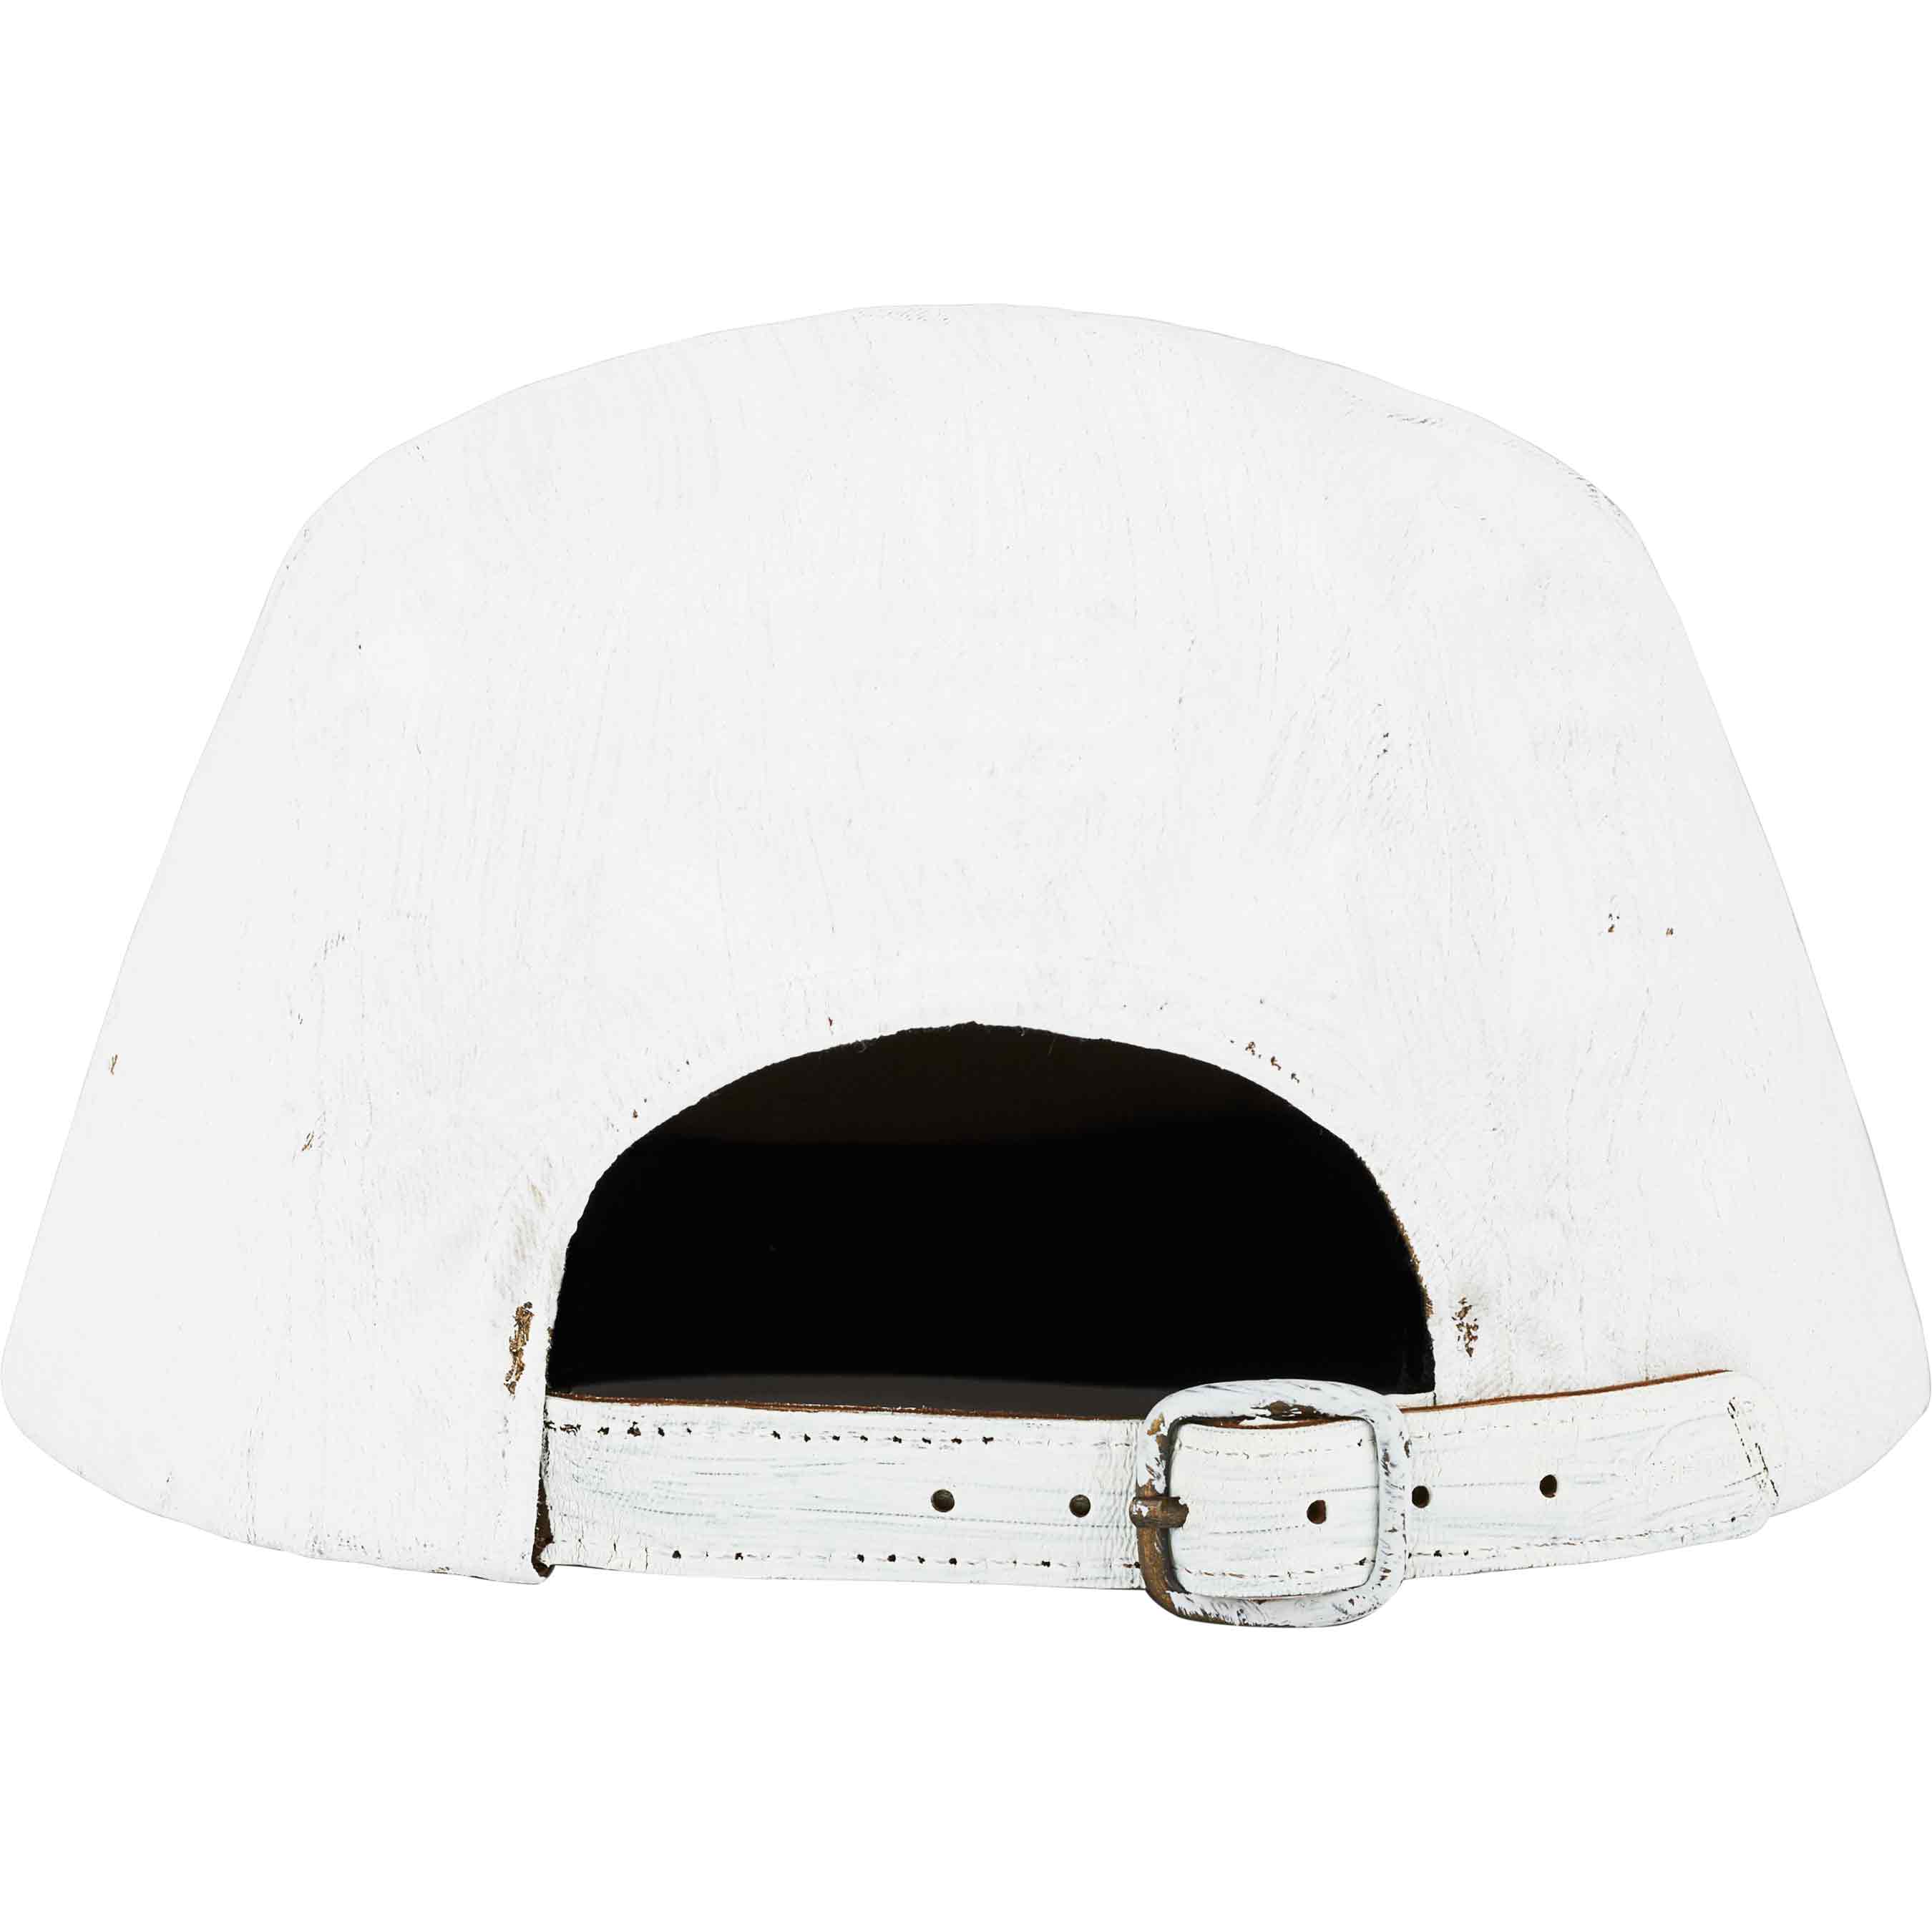 Supreme x MM6 Maison Margiela Camp Cap 種類豊富な品揃え - 帽子